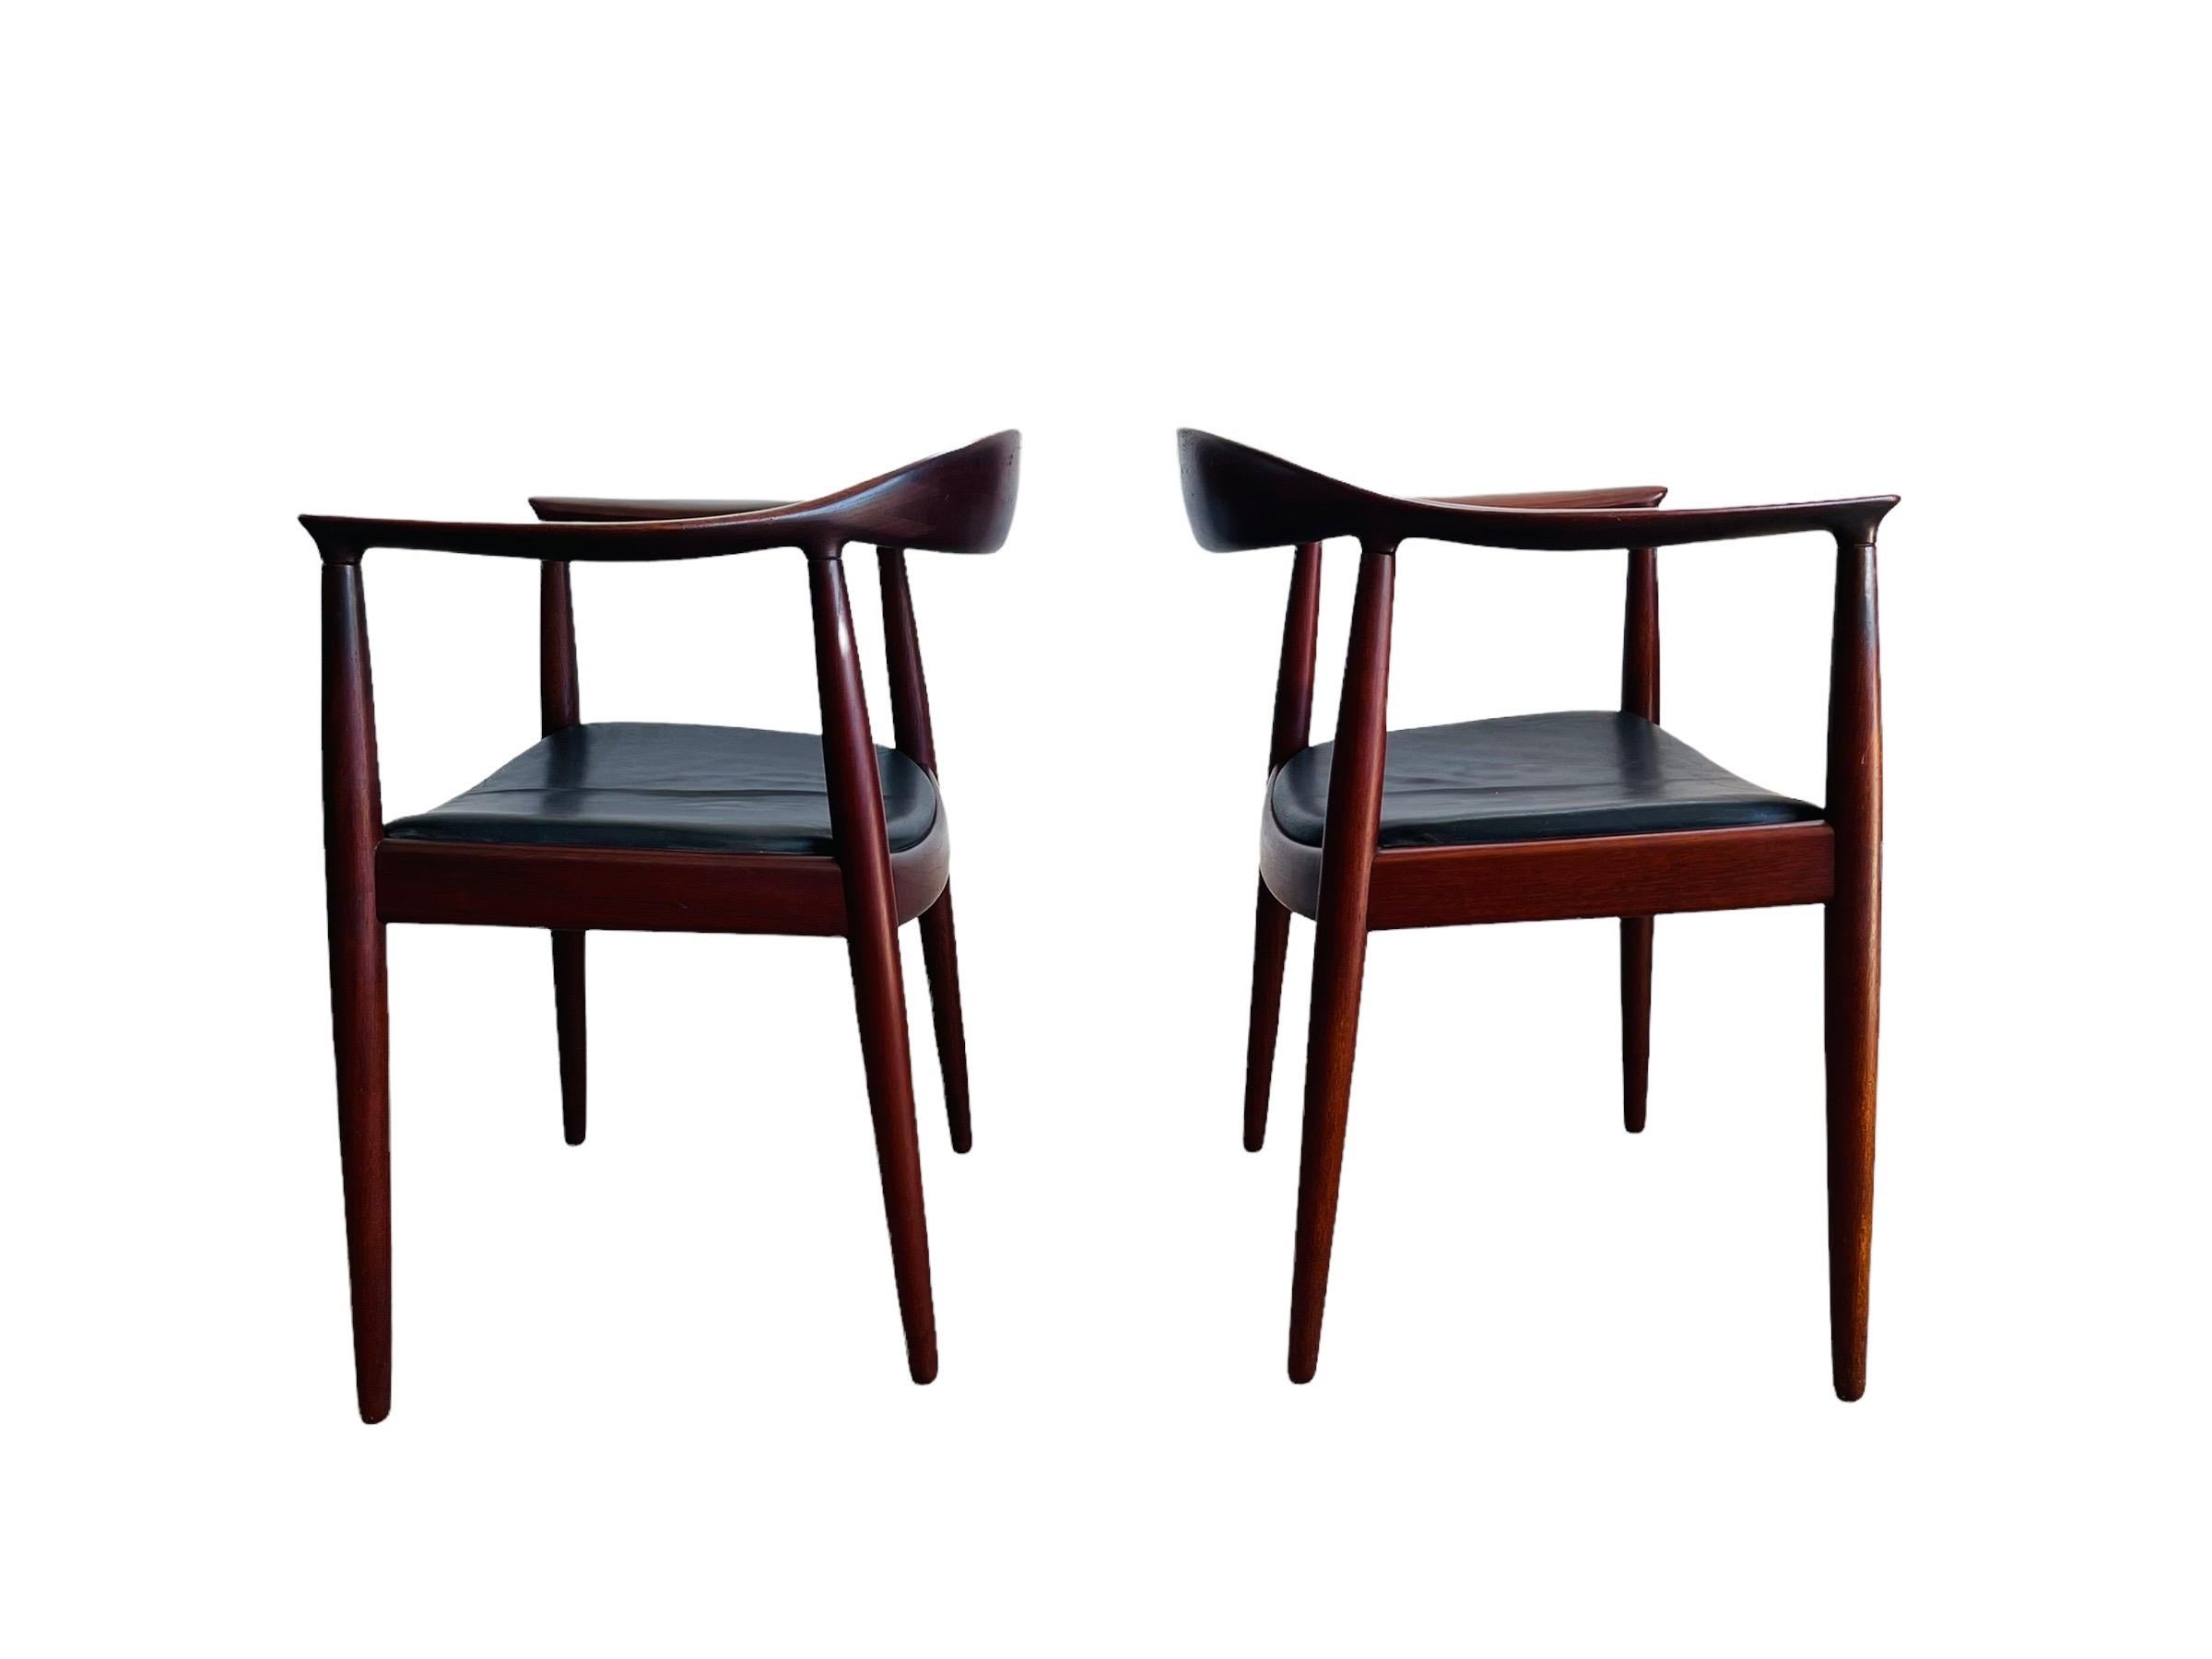 Stunning rare pair of Danish modern Teak chairs designed by Hans J. Wegner for Johannes Hansen circa 1954. The chairs are upholstered with original black leather on Teak frame. “The Chair” AKA 